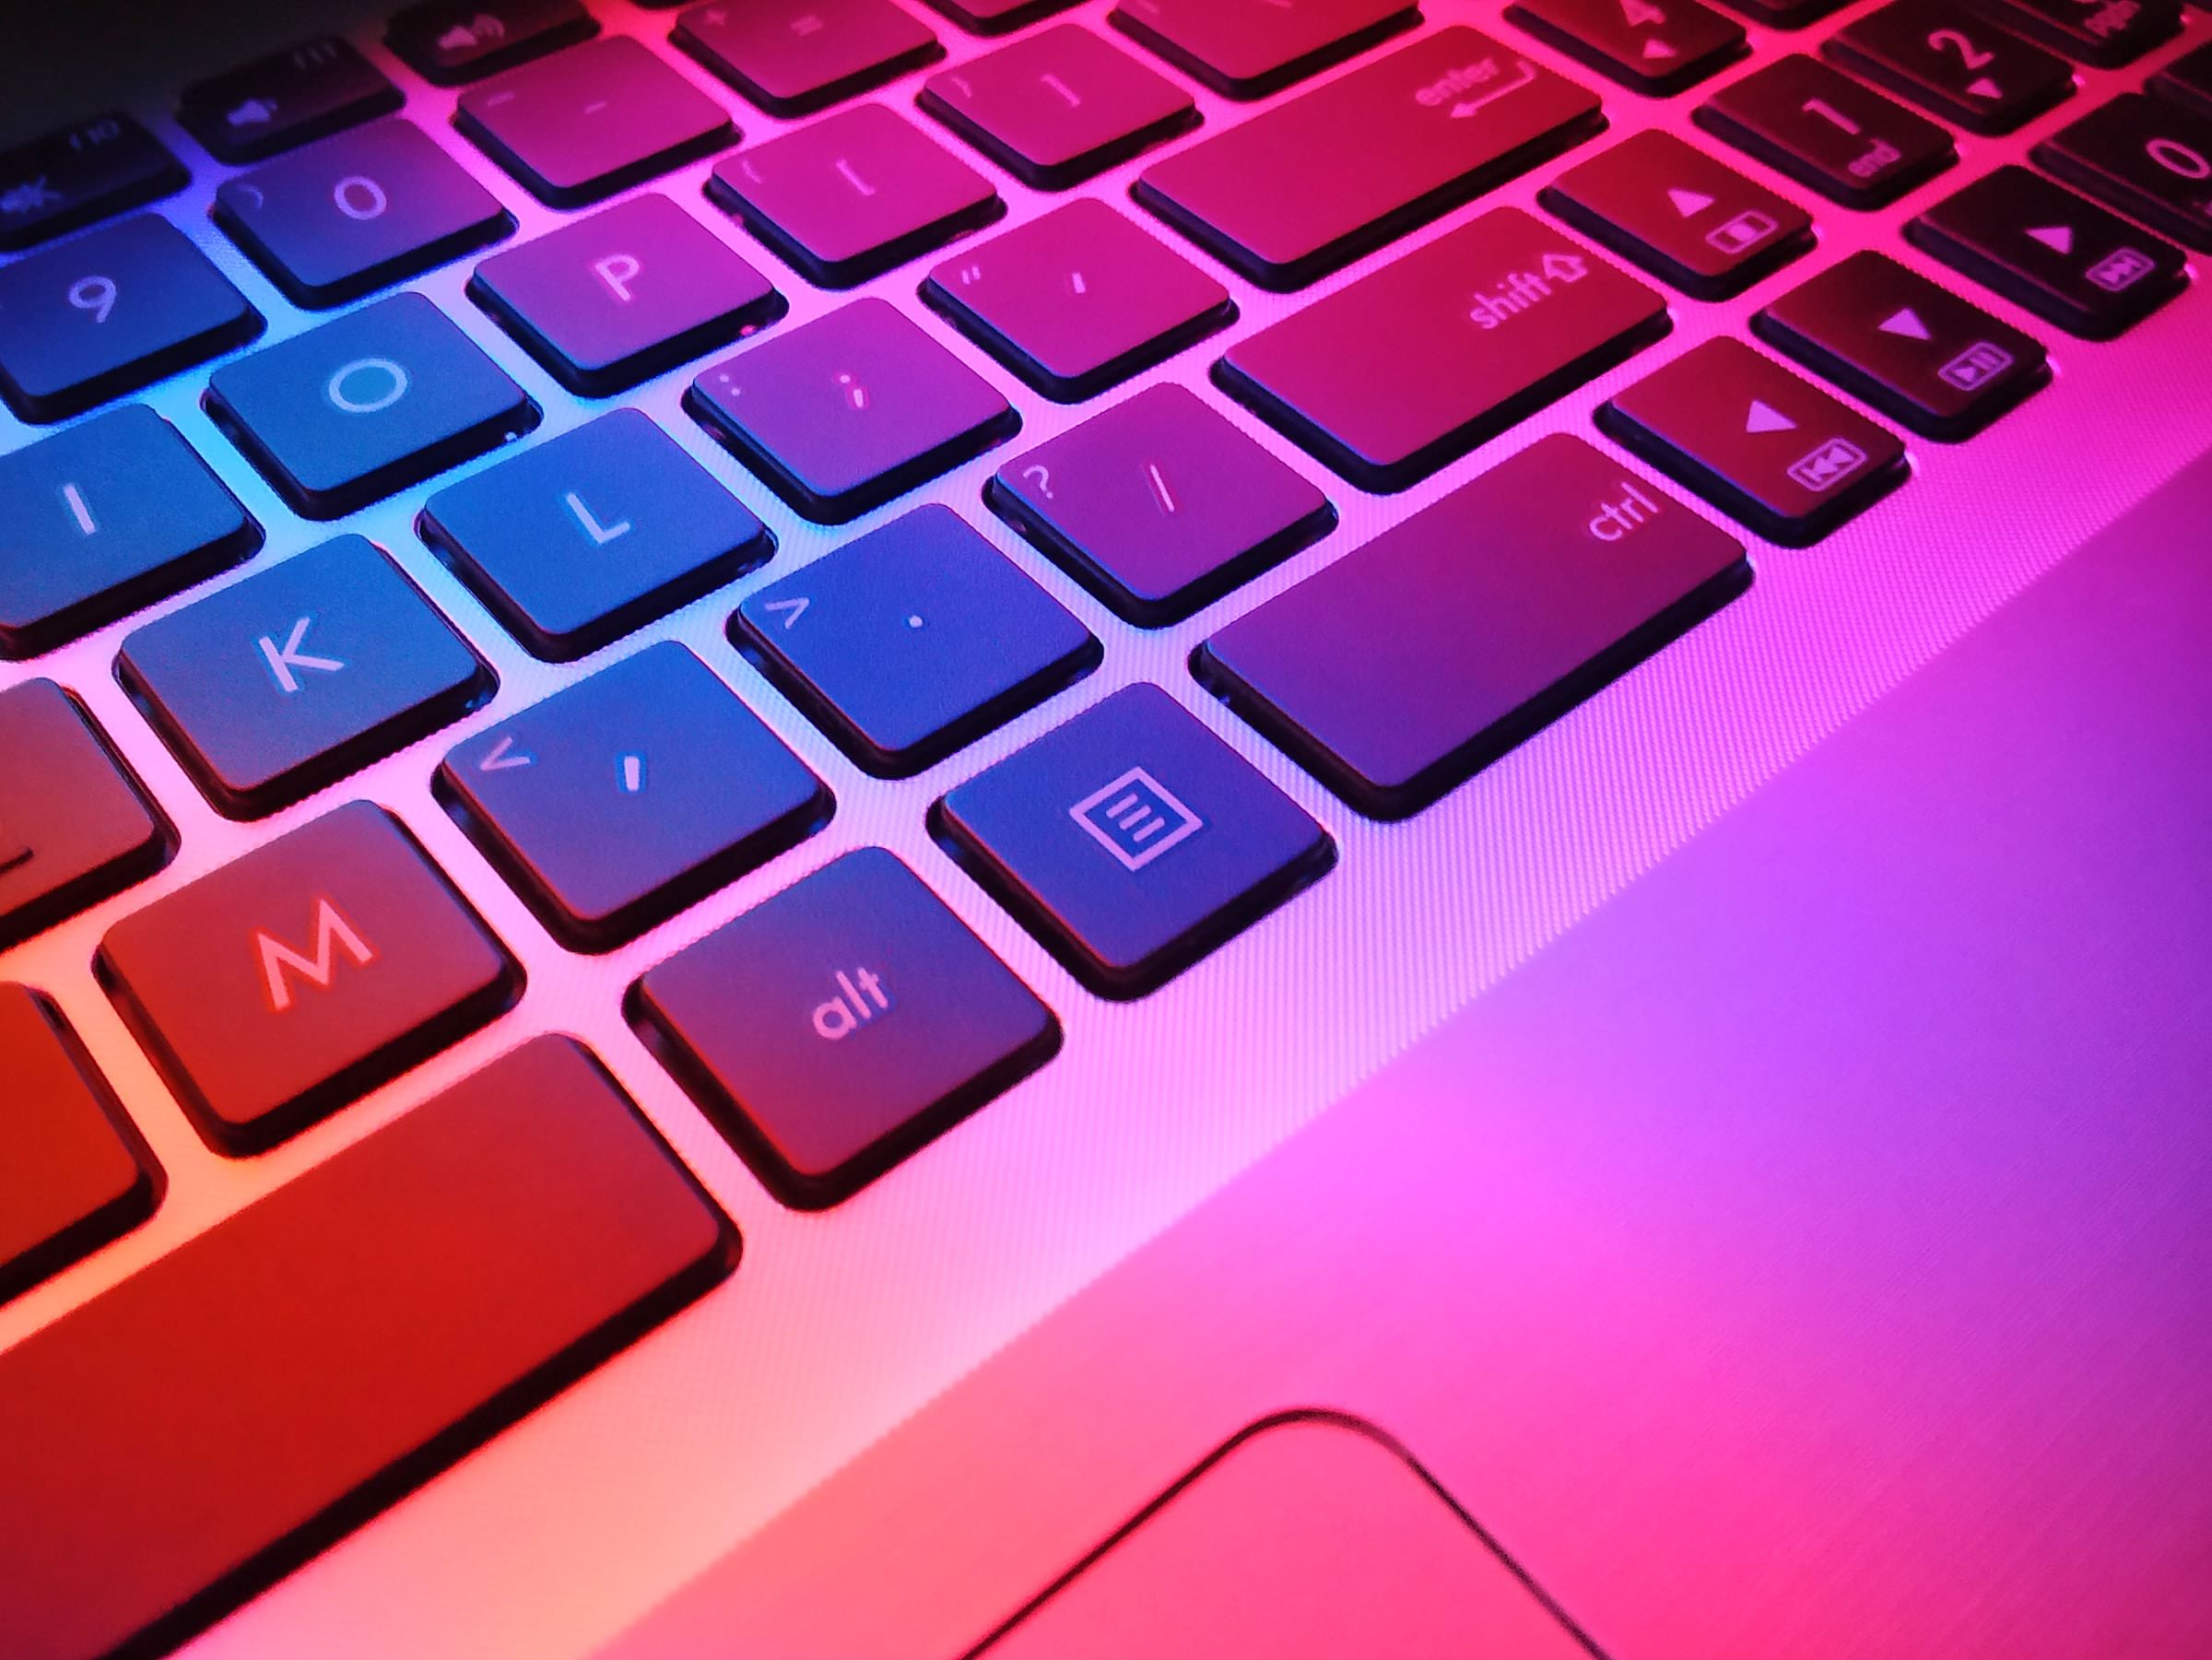 colorful foto of a macbook keyboard